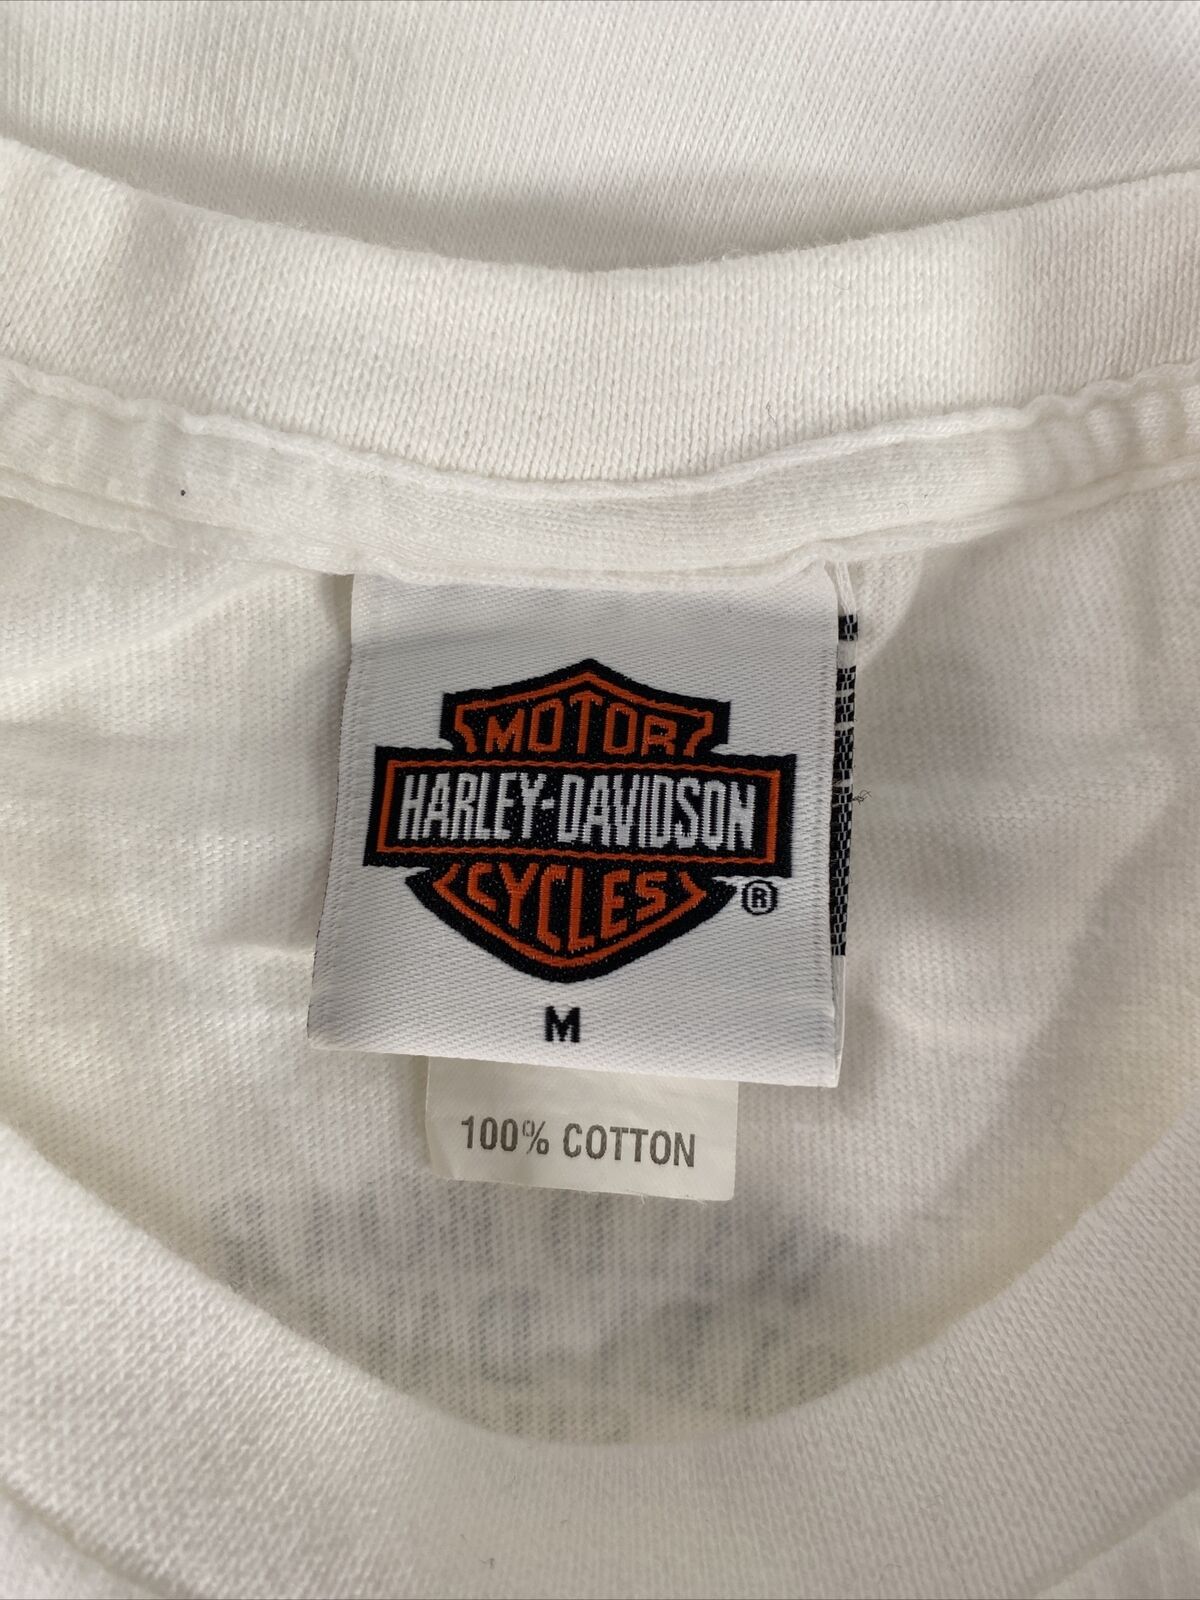 Harley Davidson Women's White "Grand Rapids, MI" Cotton T-Shirt - M